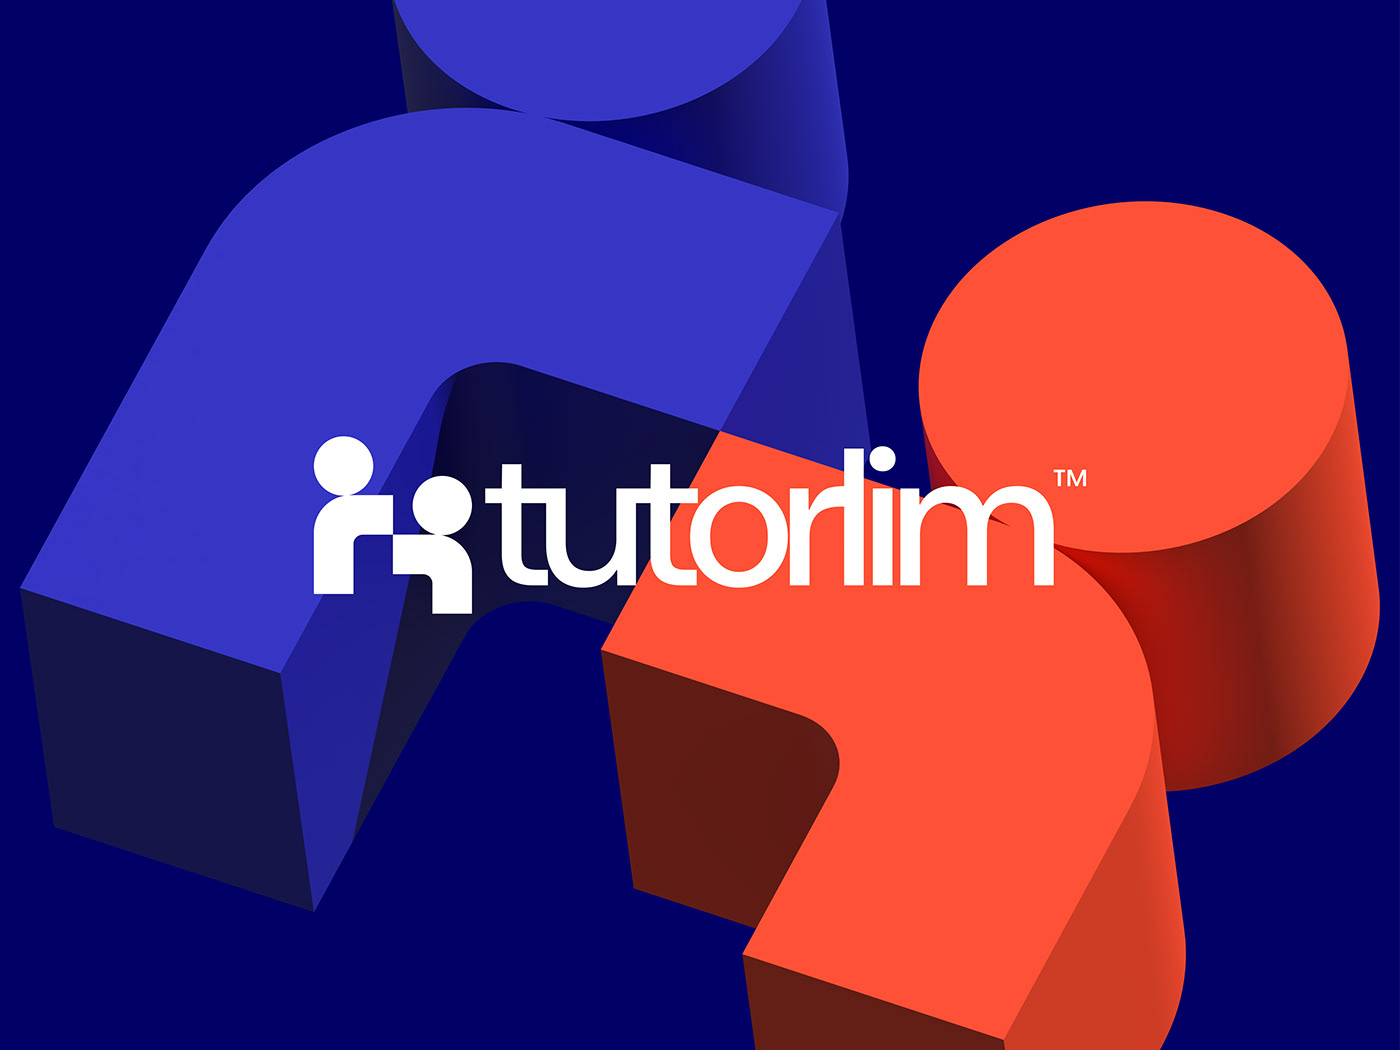 Logo design of Tutorlim tutoring company in a 3D background